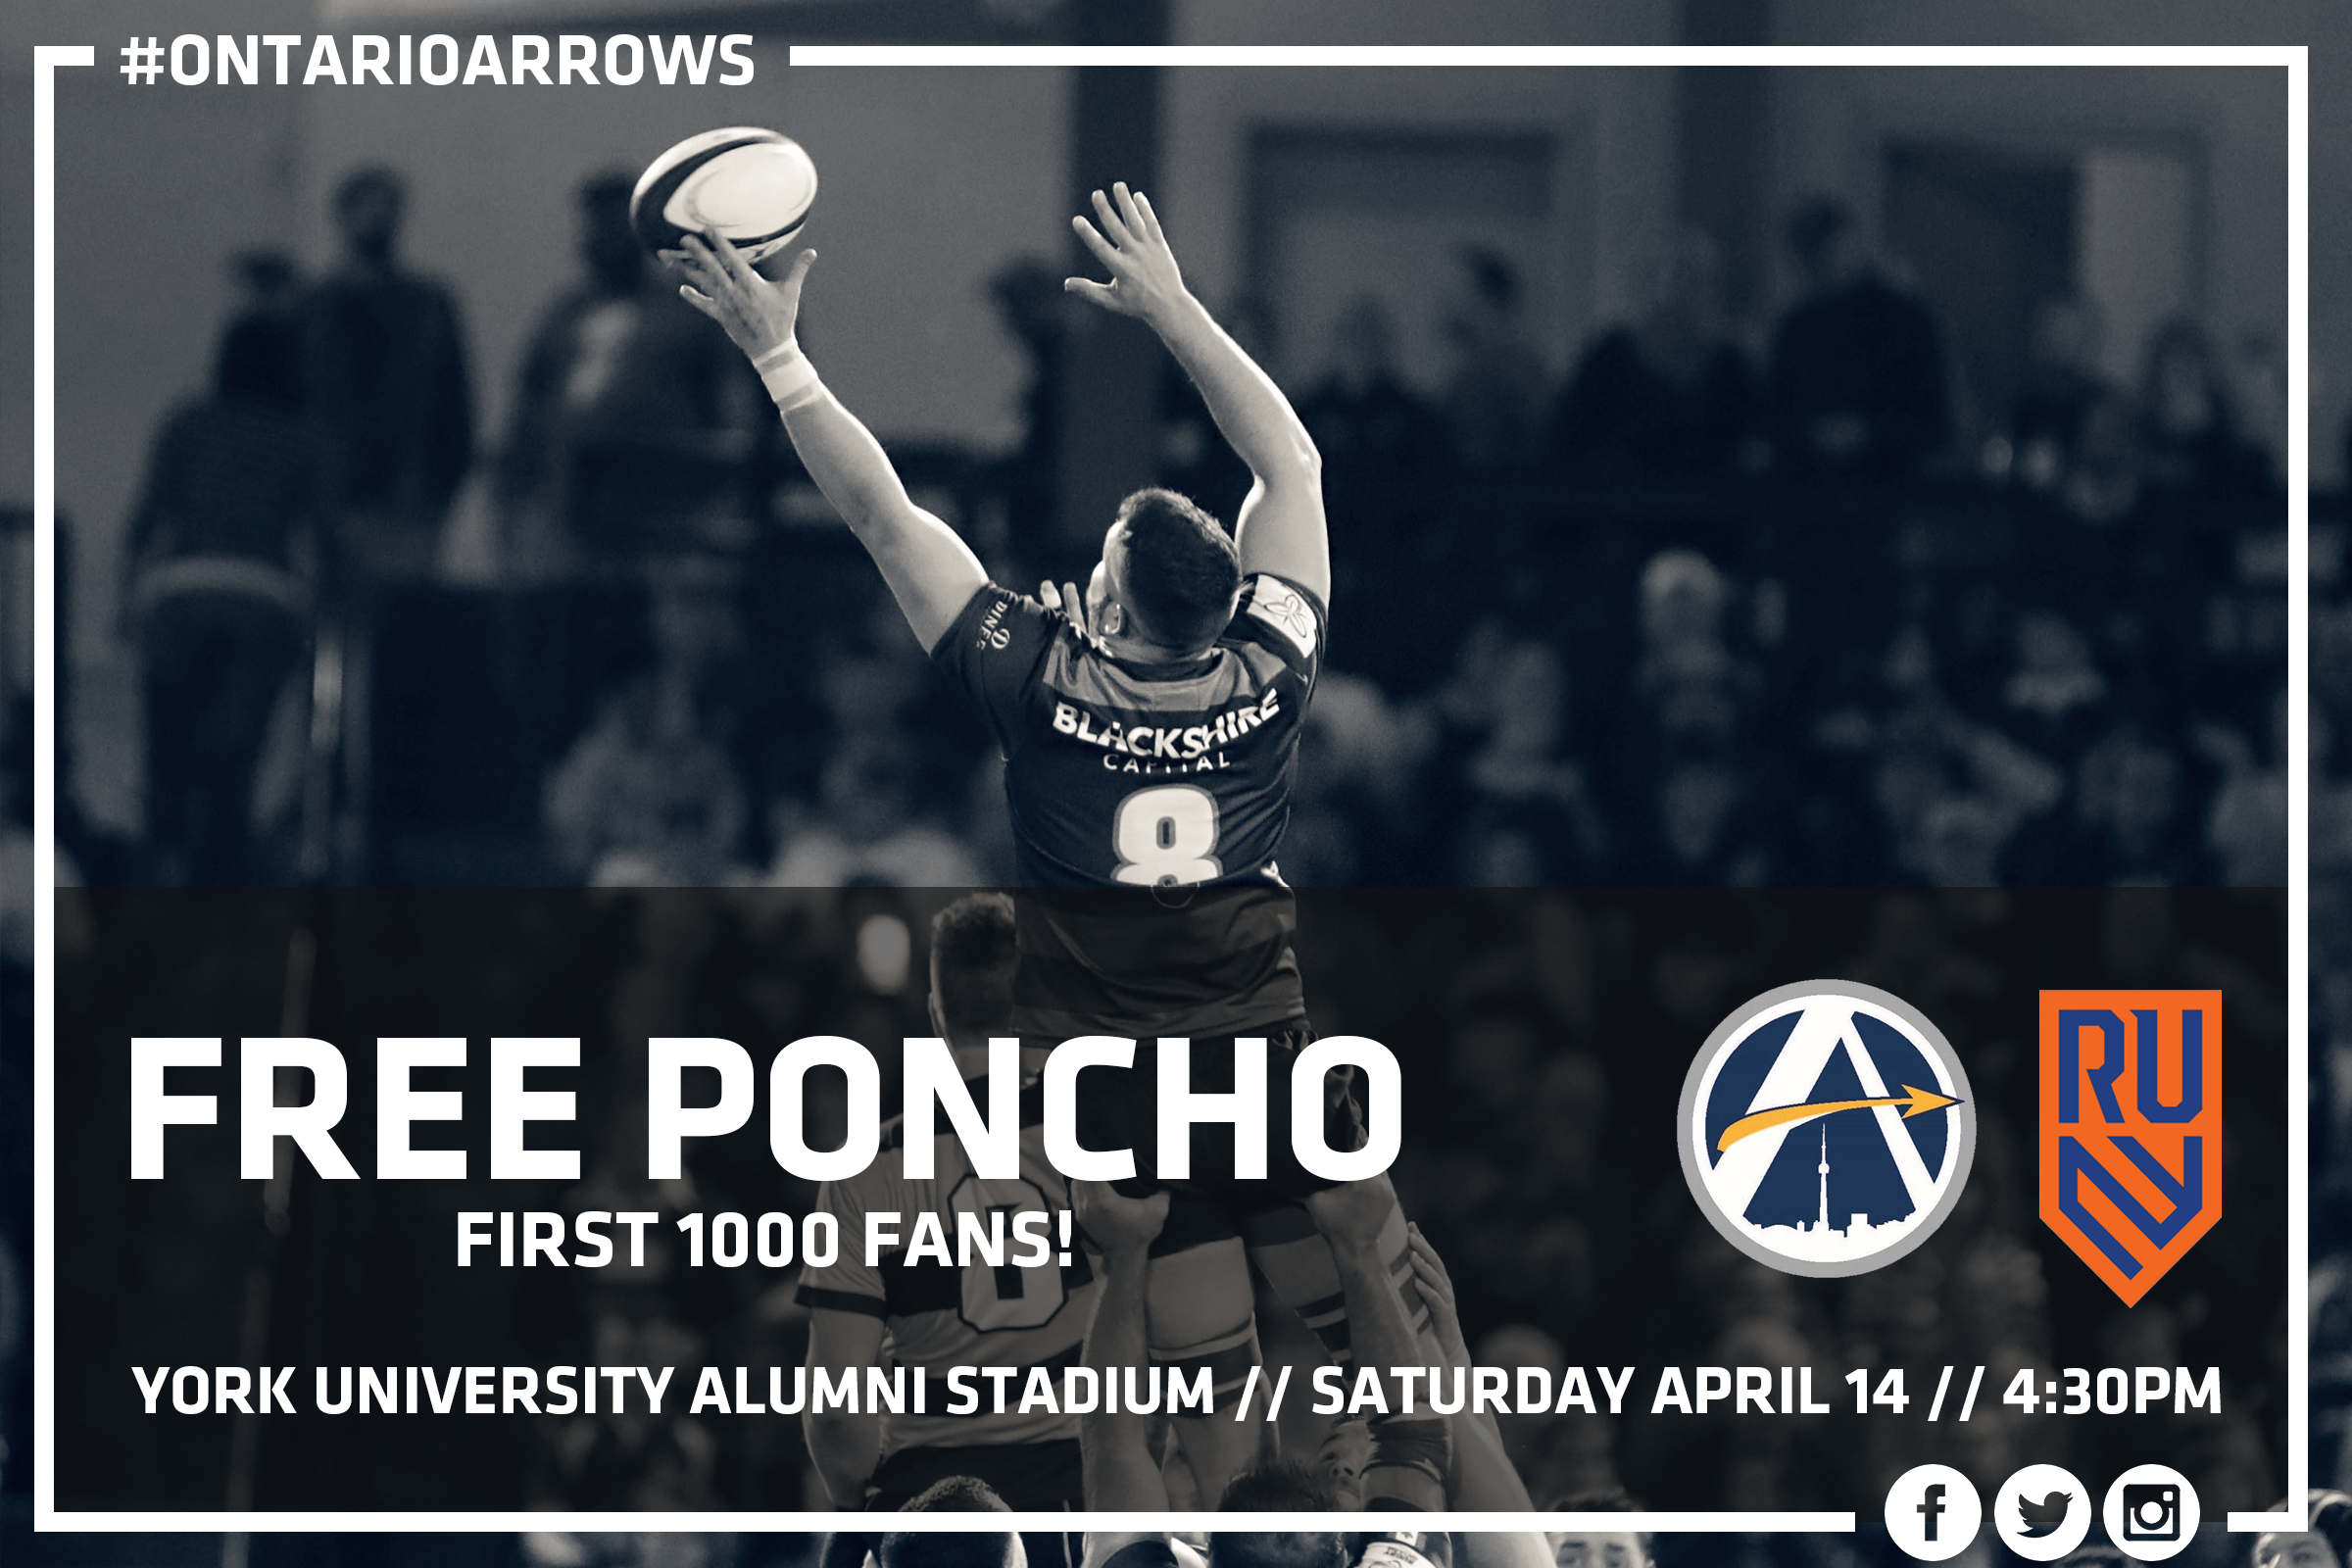 Free ponchos for first 1000 fans at York University Alumni Stadium on Saturday!